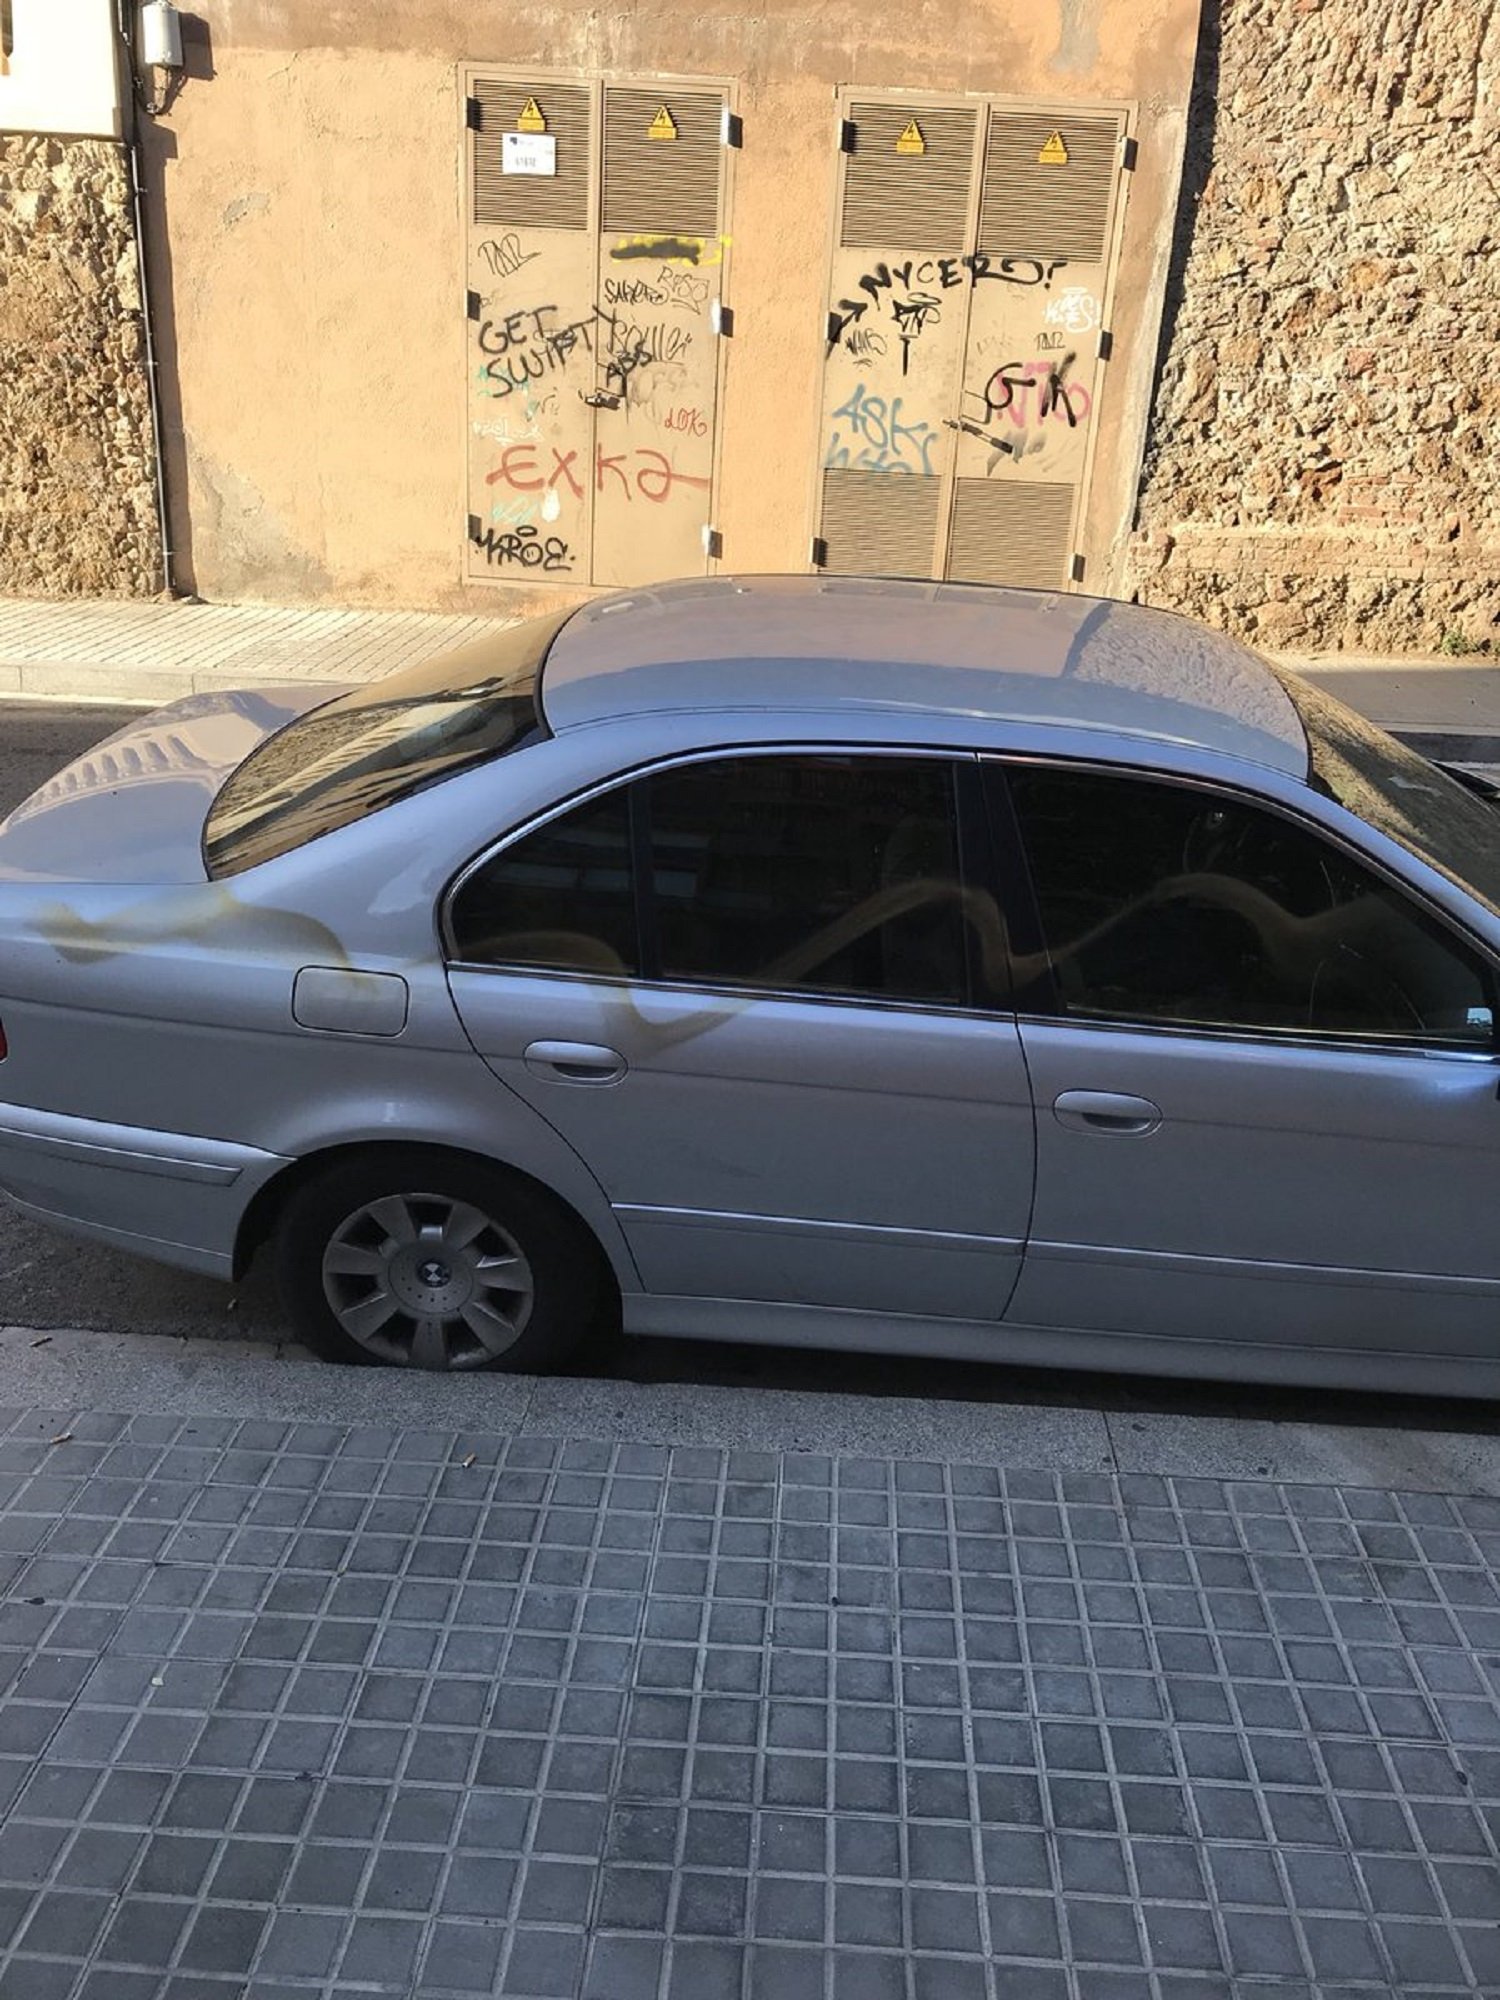 Girauta denuncia a la Guardia Civil que le han pintado el coche